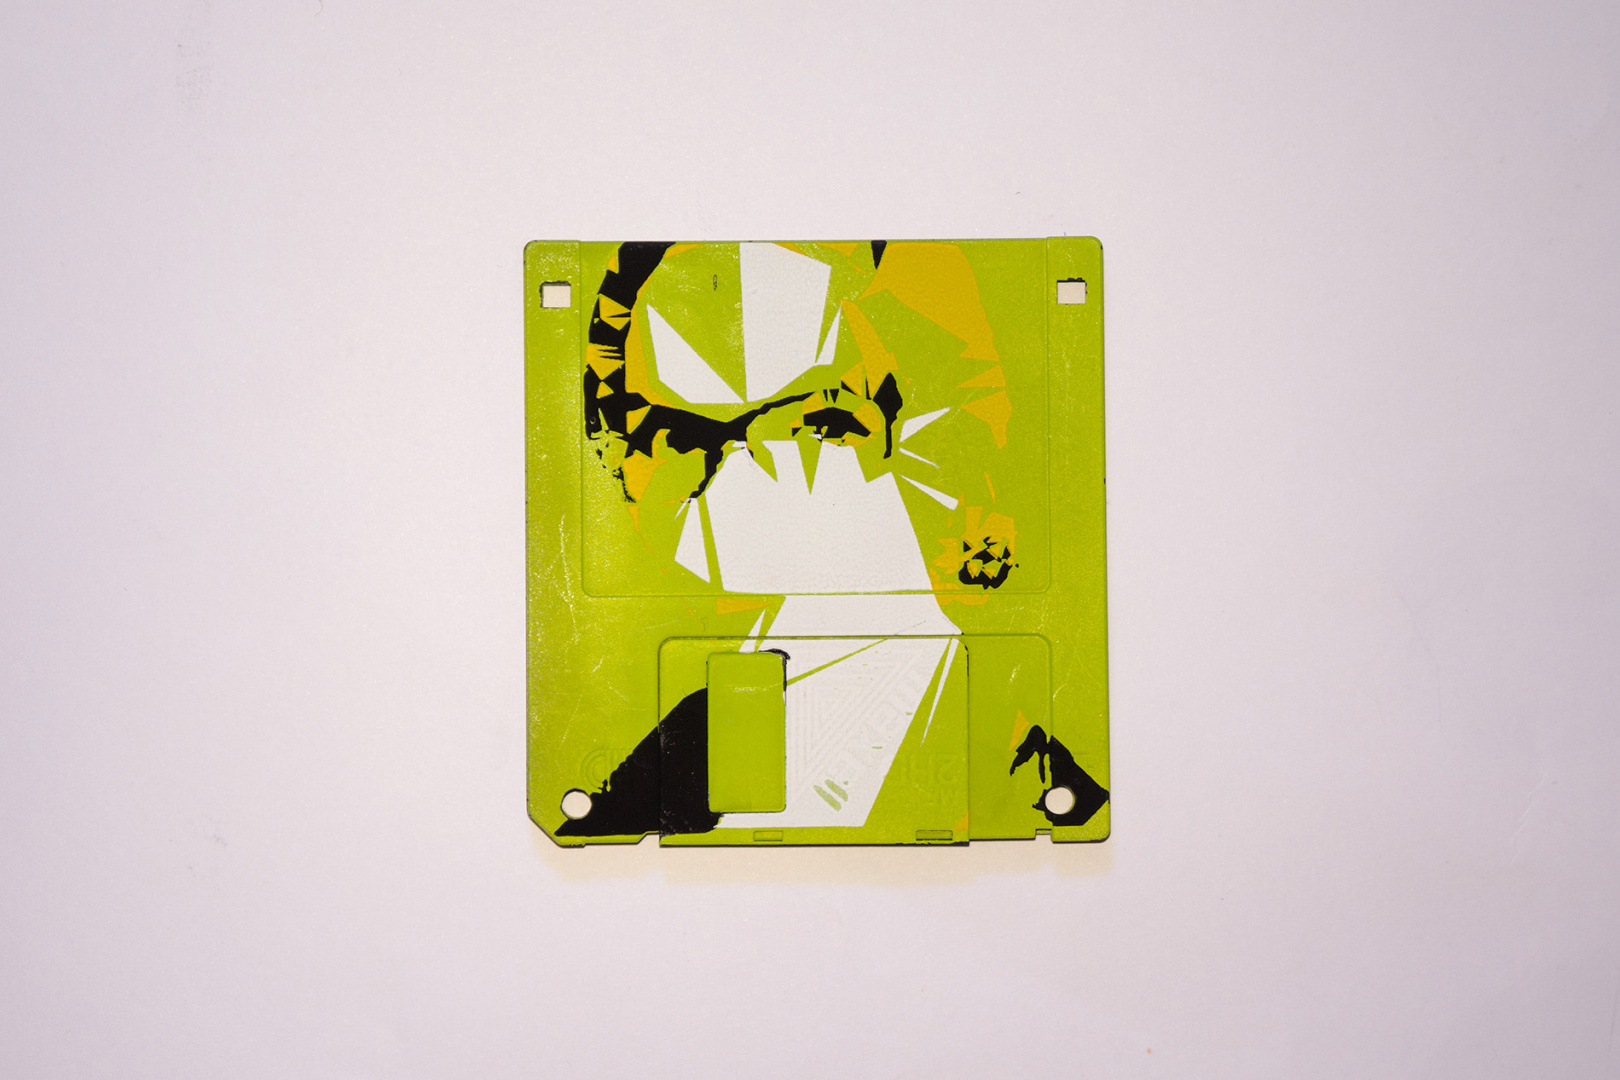 Serigraphy / Silkscreen of Milja on a 3.5" floppy disk. Contemporary artwork. Lemon version